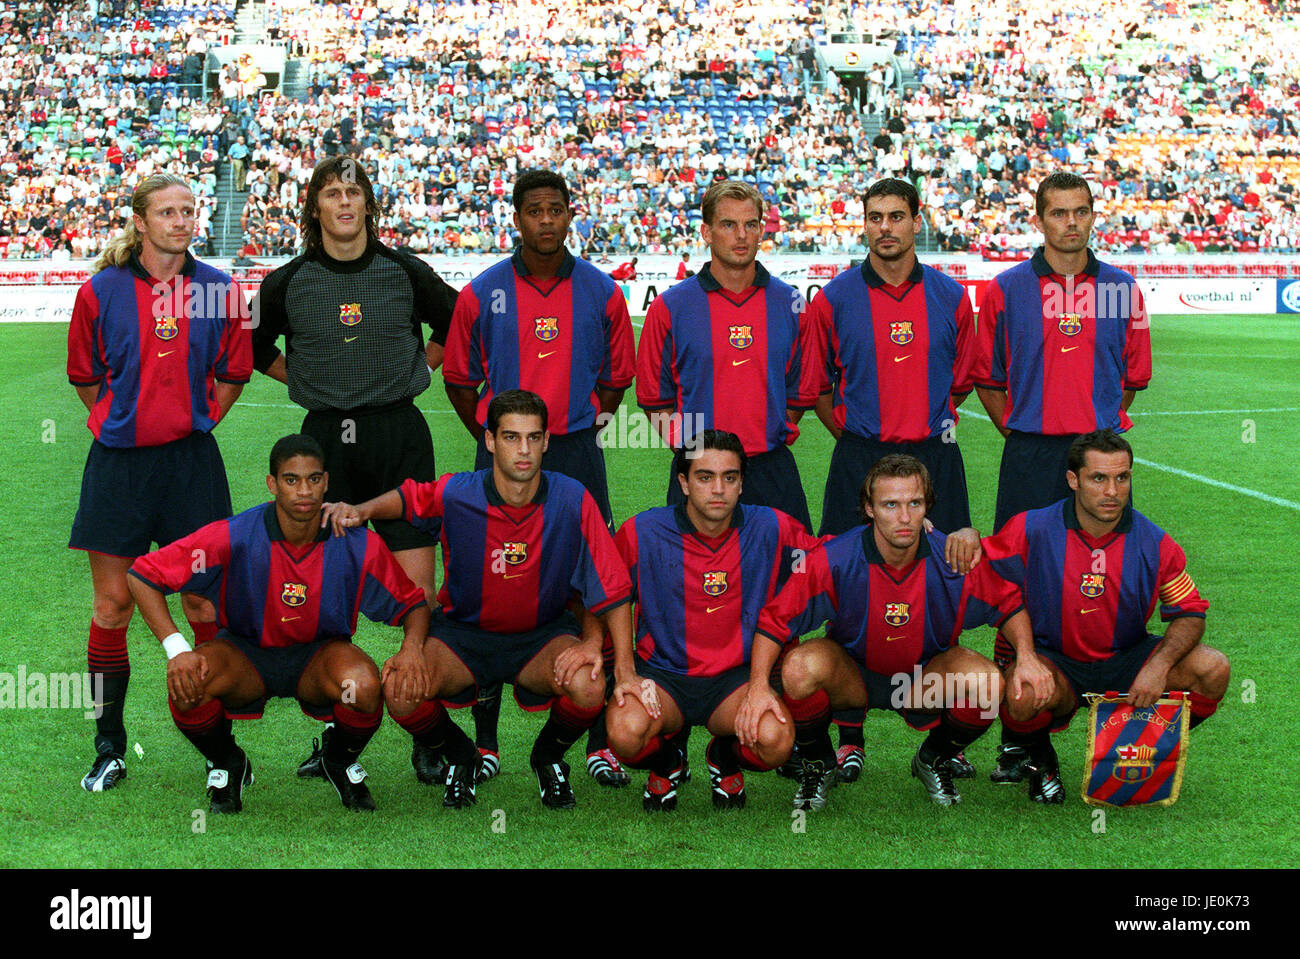 FC BARCELONA FC BARCELONA 05 August 2000 Stock Photo - Alamy